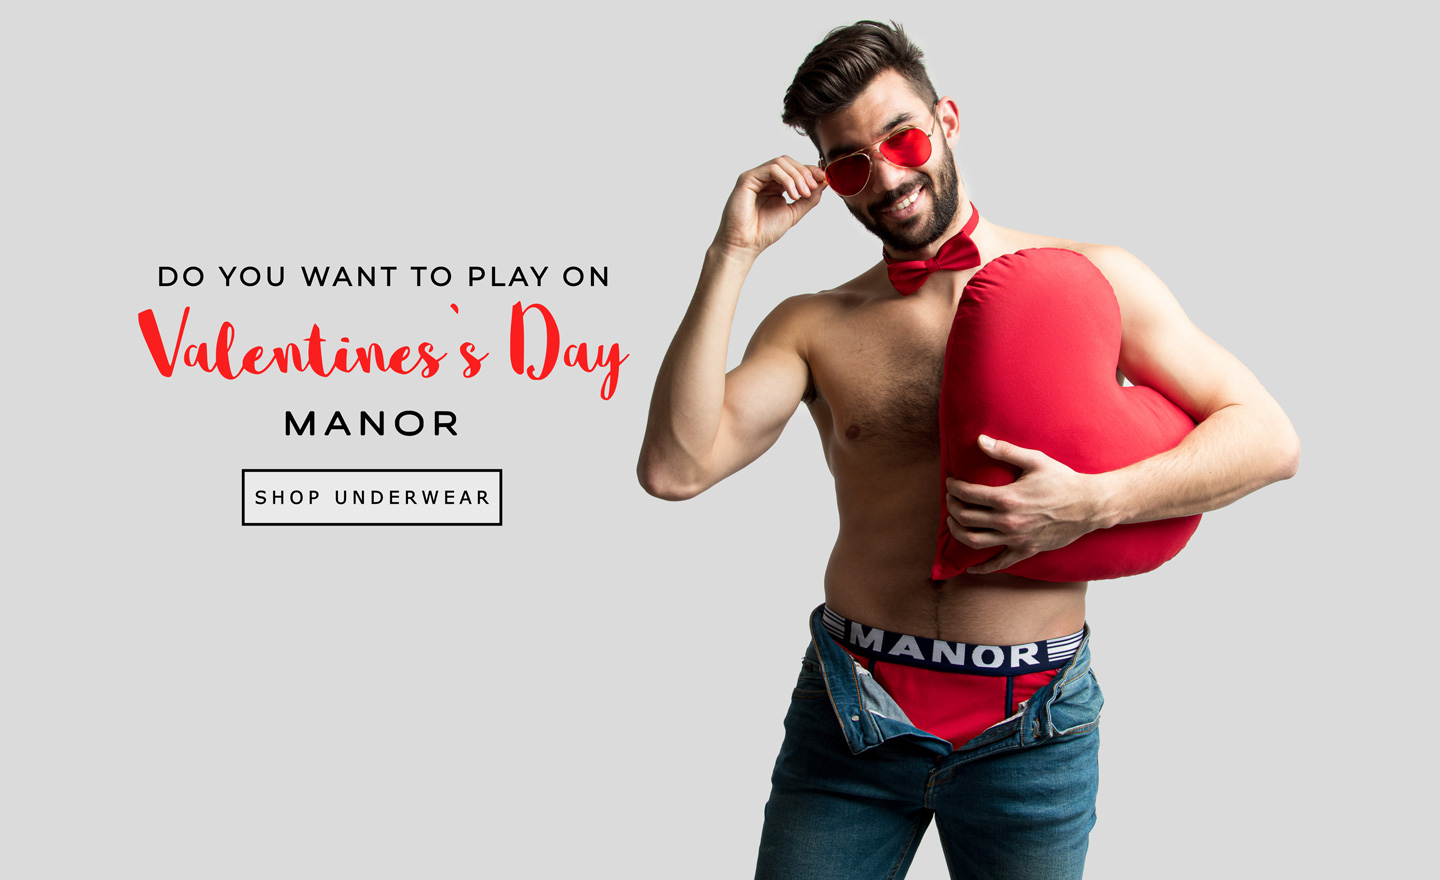 Dan zaljubljenih 2021 Manor underwear muški donji veš